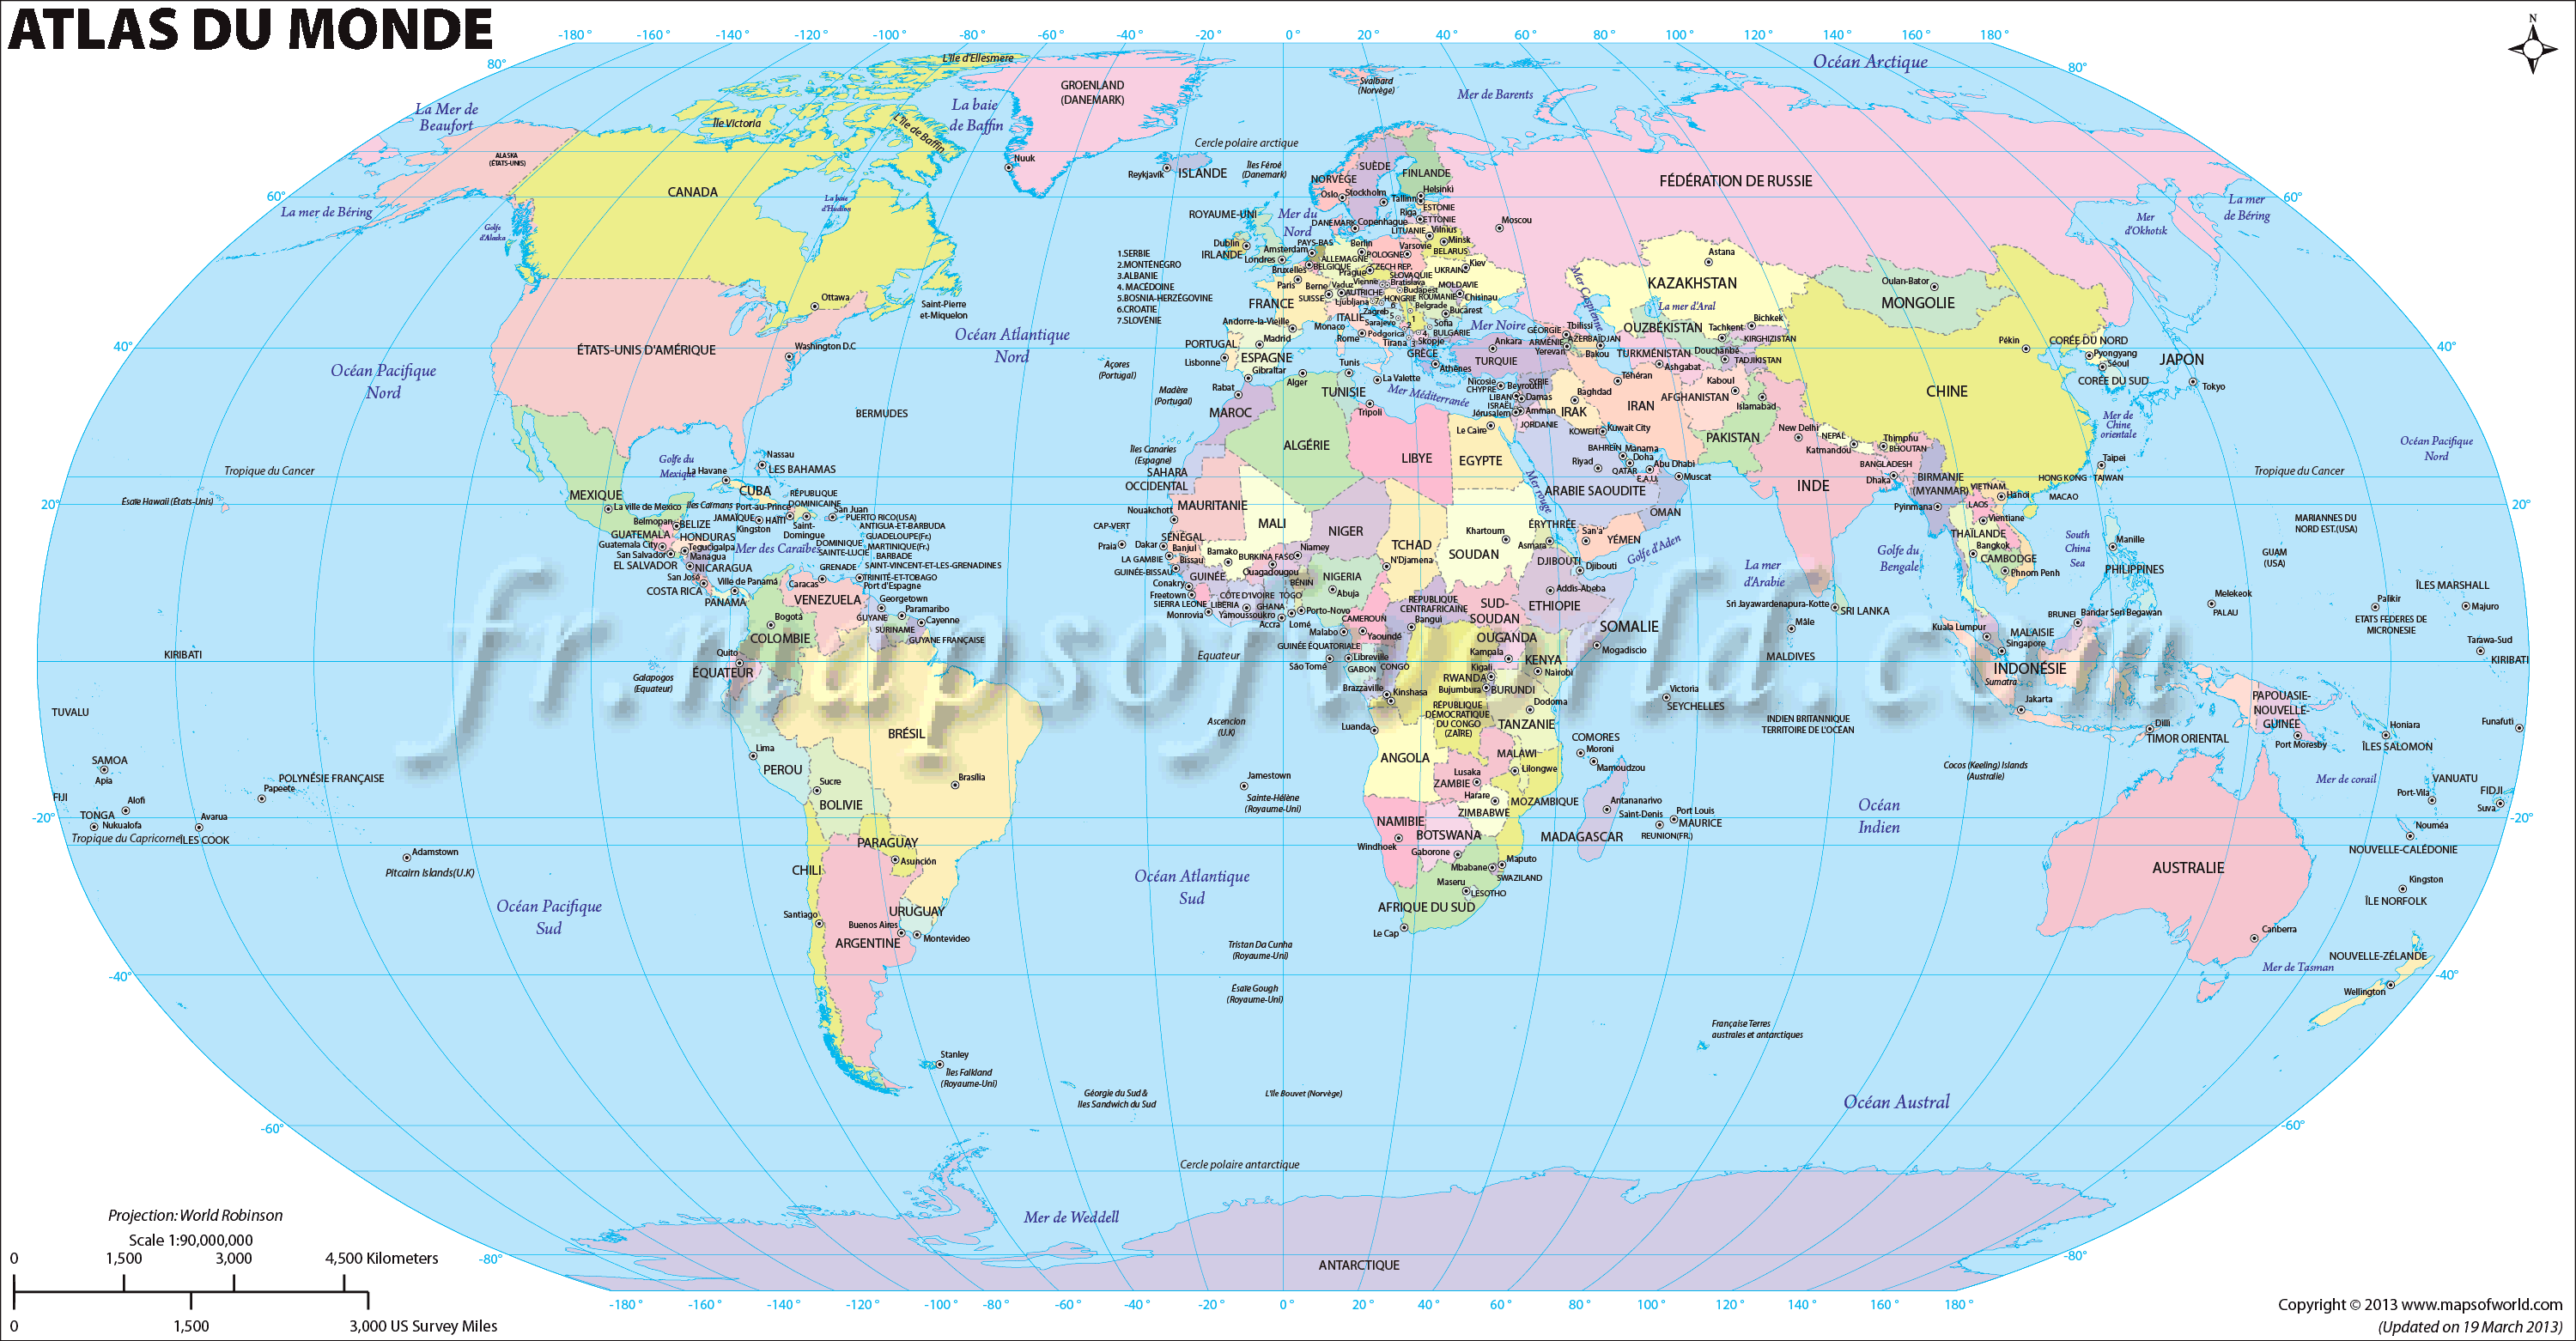 Atlas du monde | Dictionary Bank